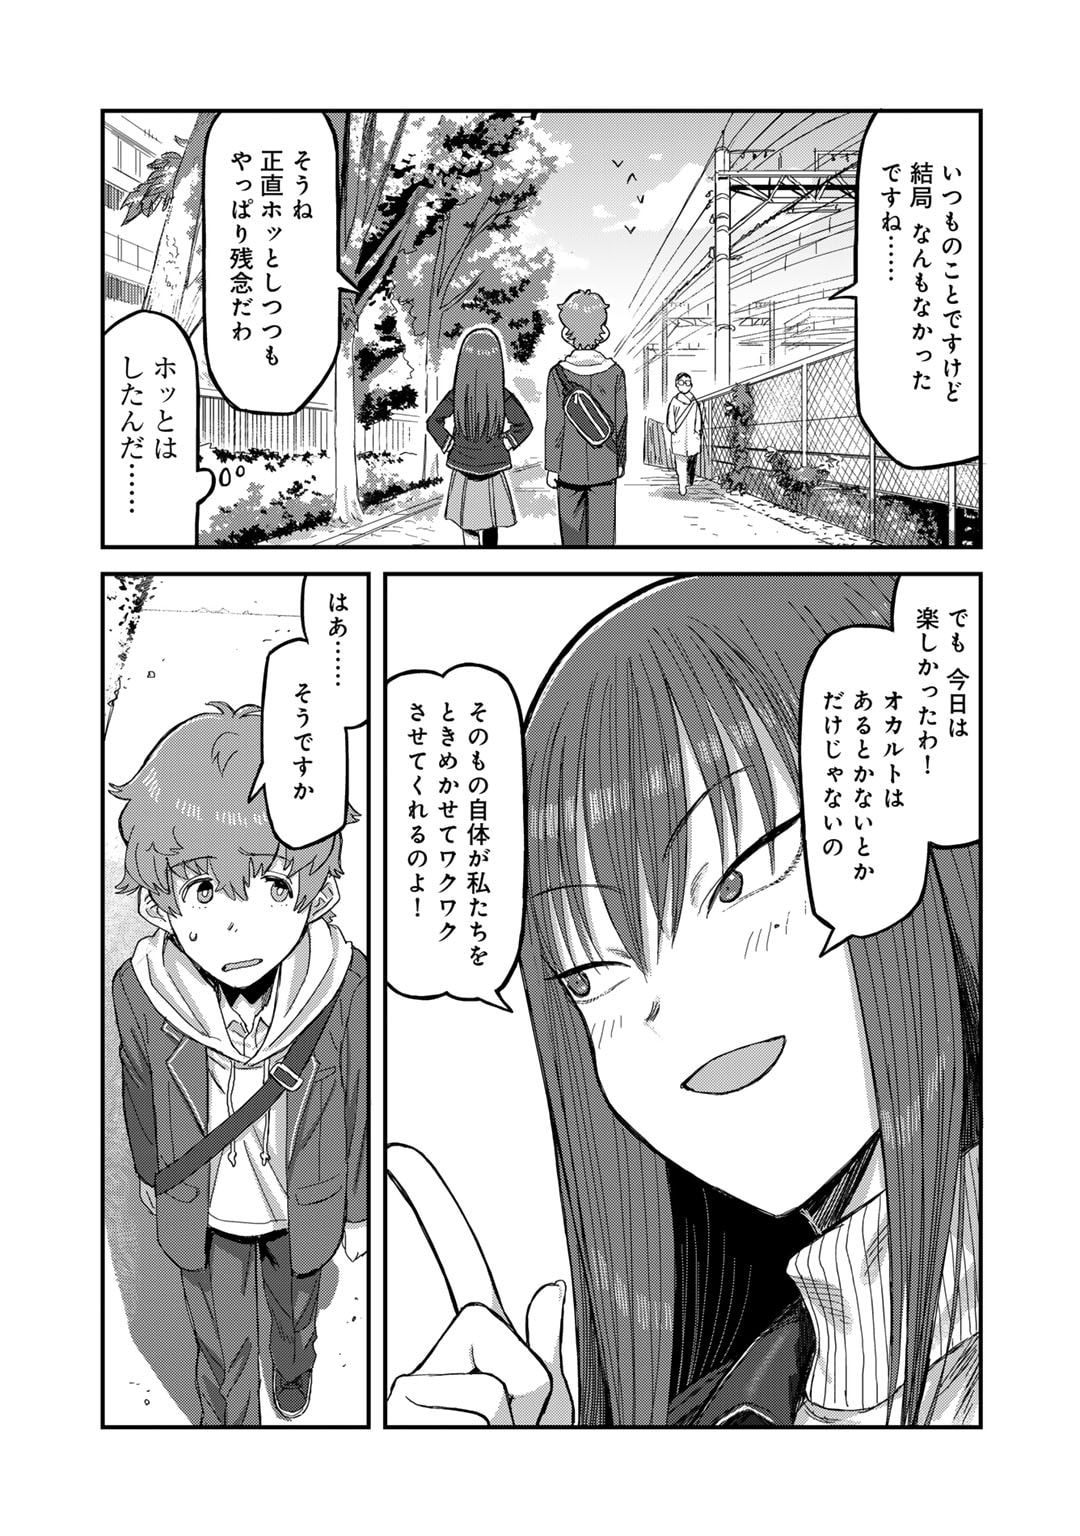 Kurono-san wa Occult ga Suki! - Chapter 1 - Page 17